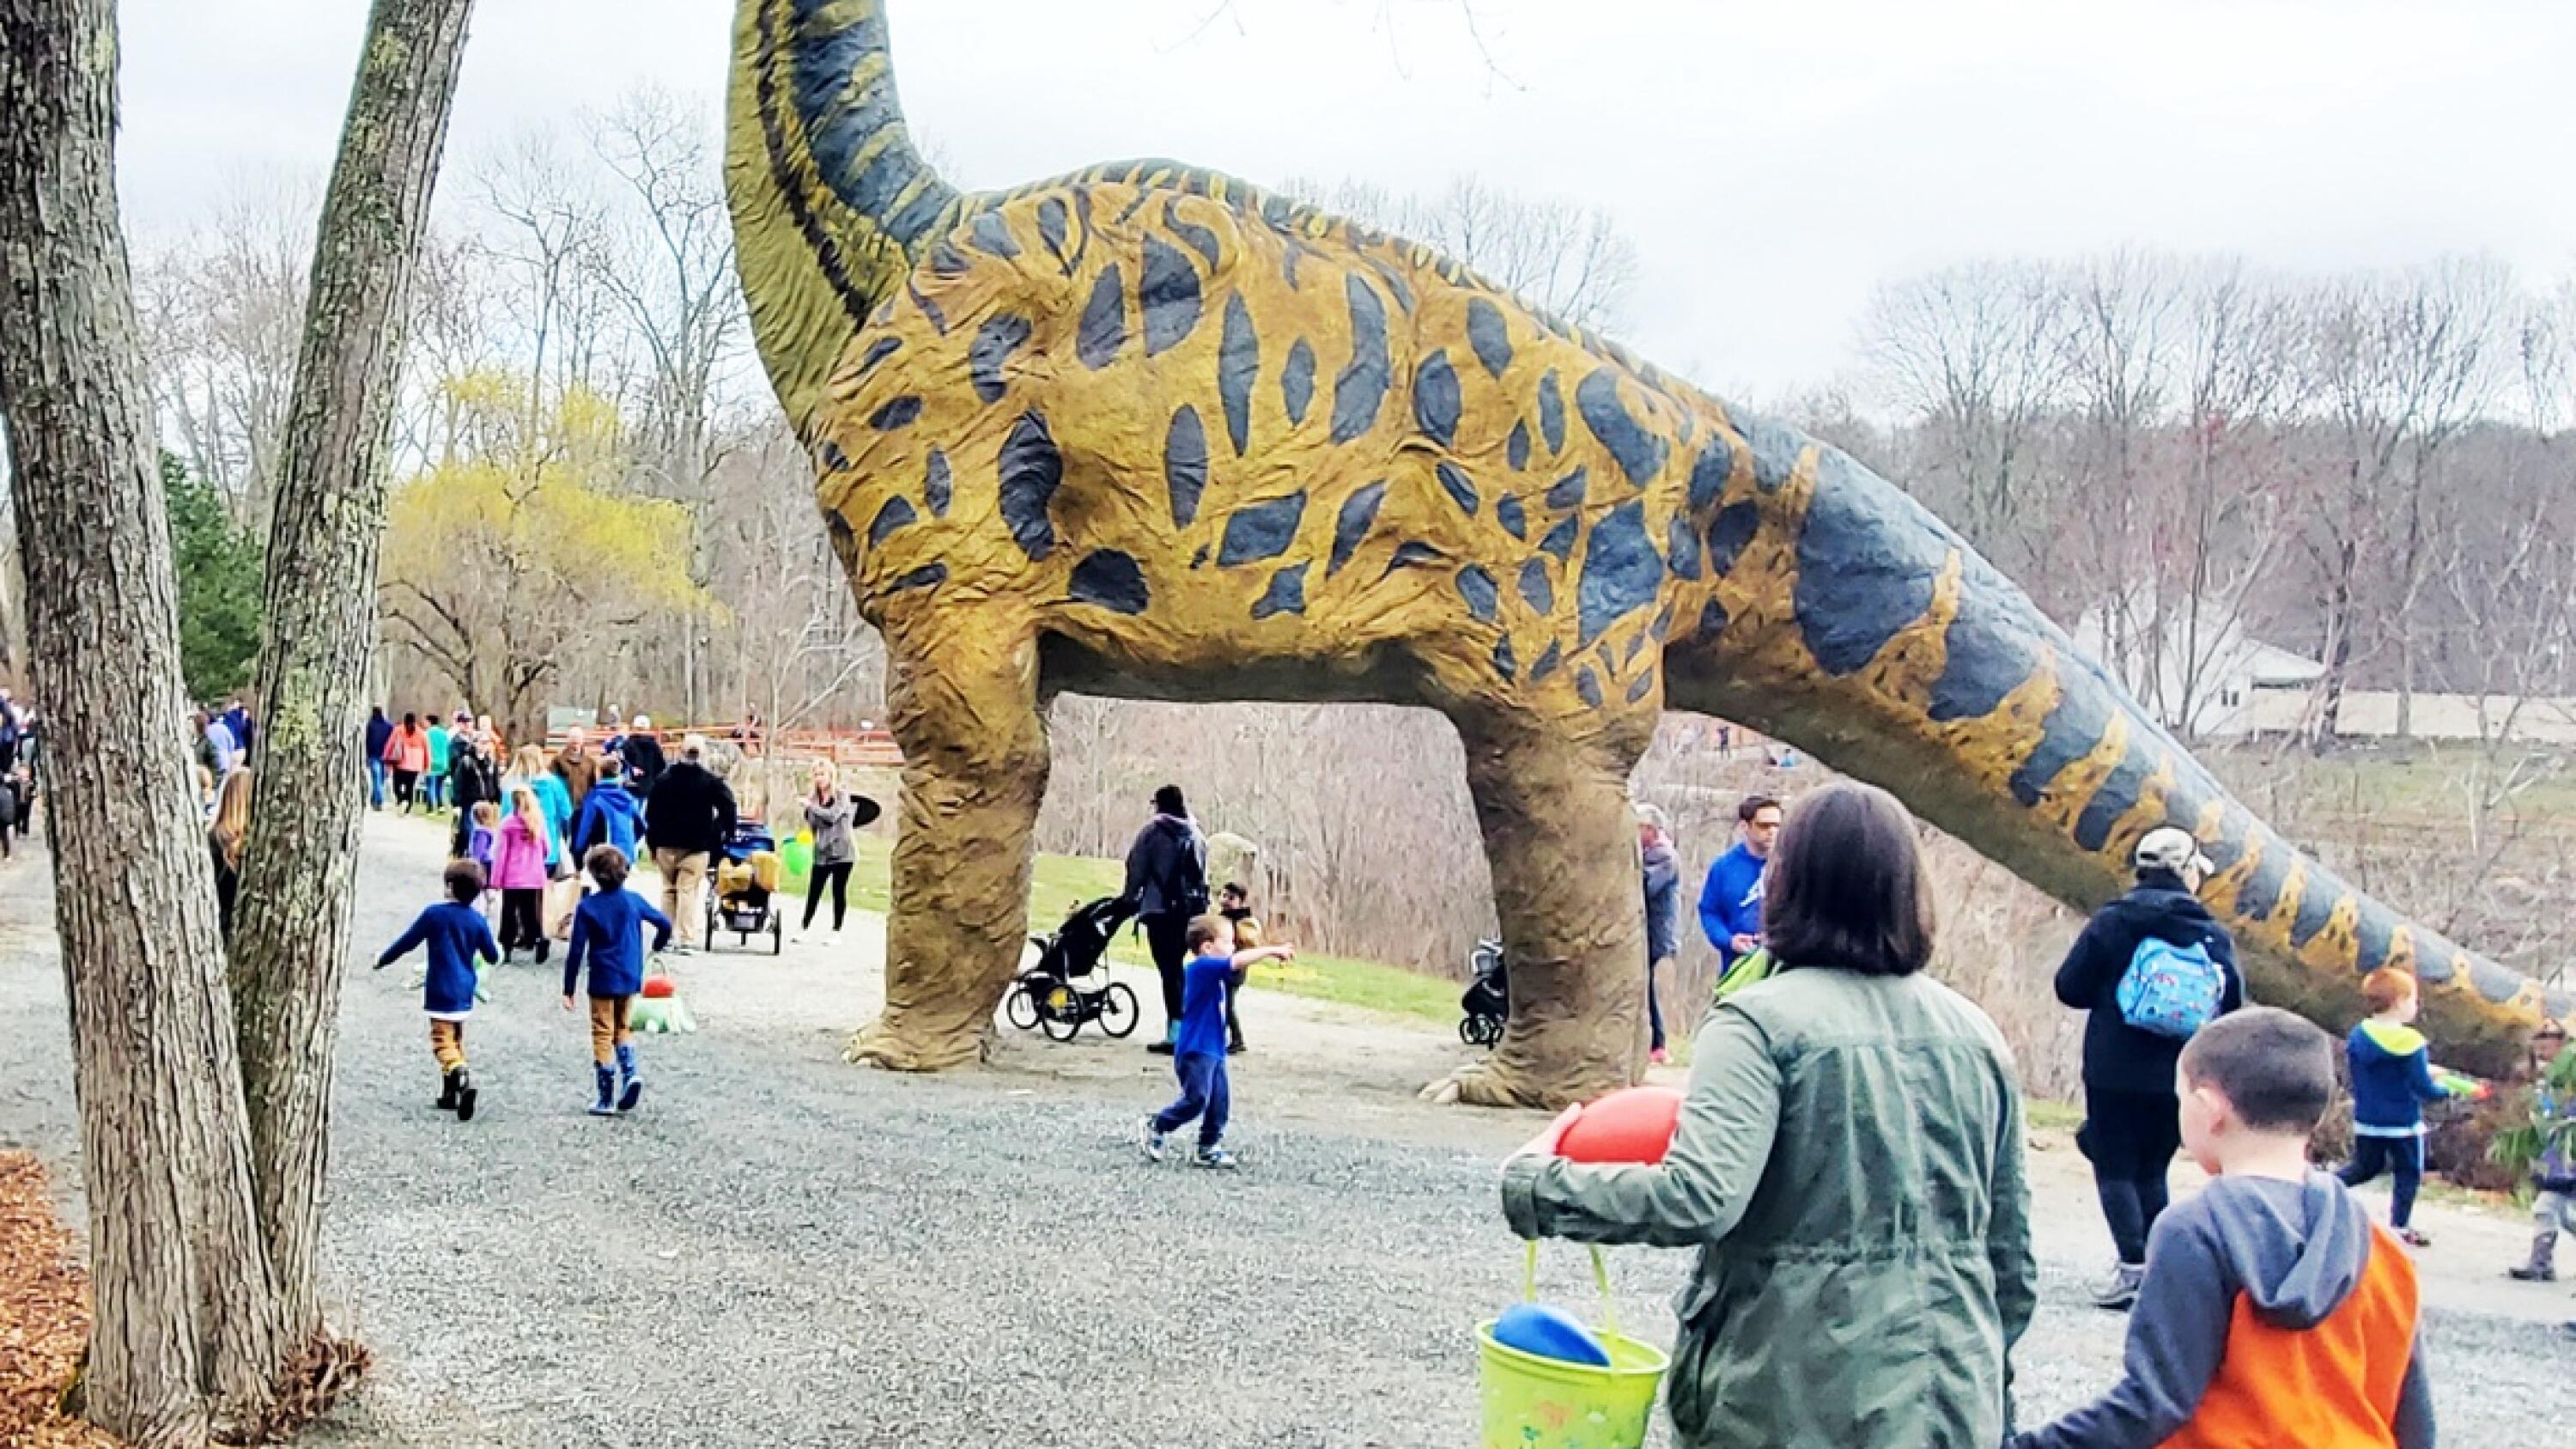 Let’s Go: Easter Egg Hunt at The Dinosaur Place